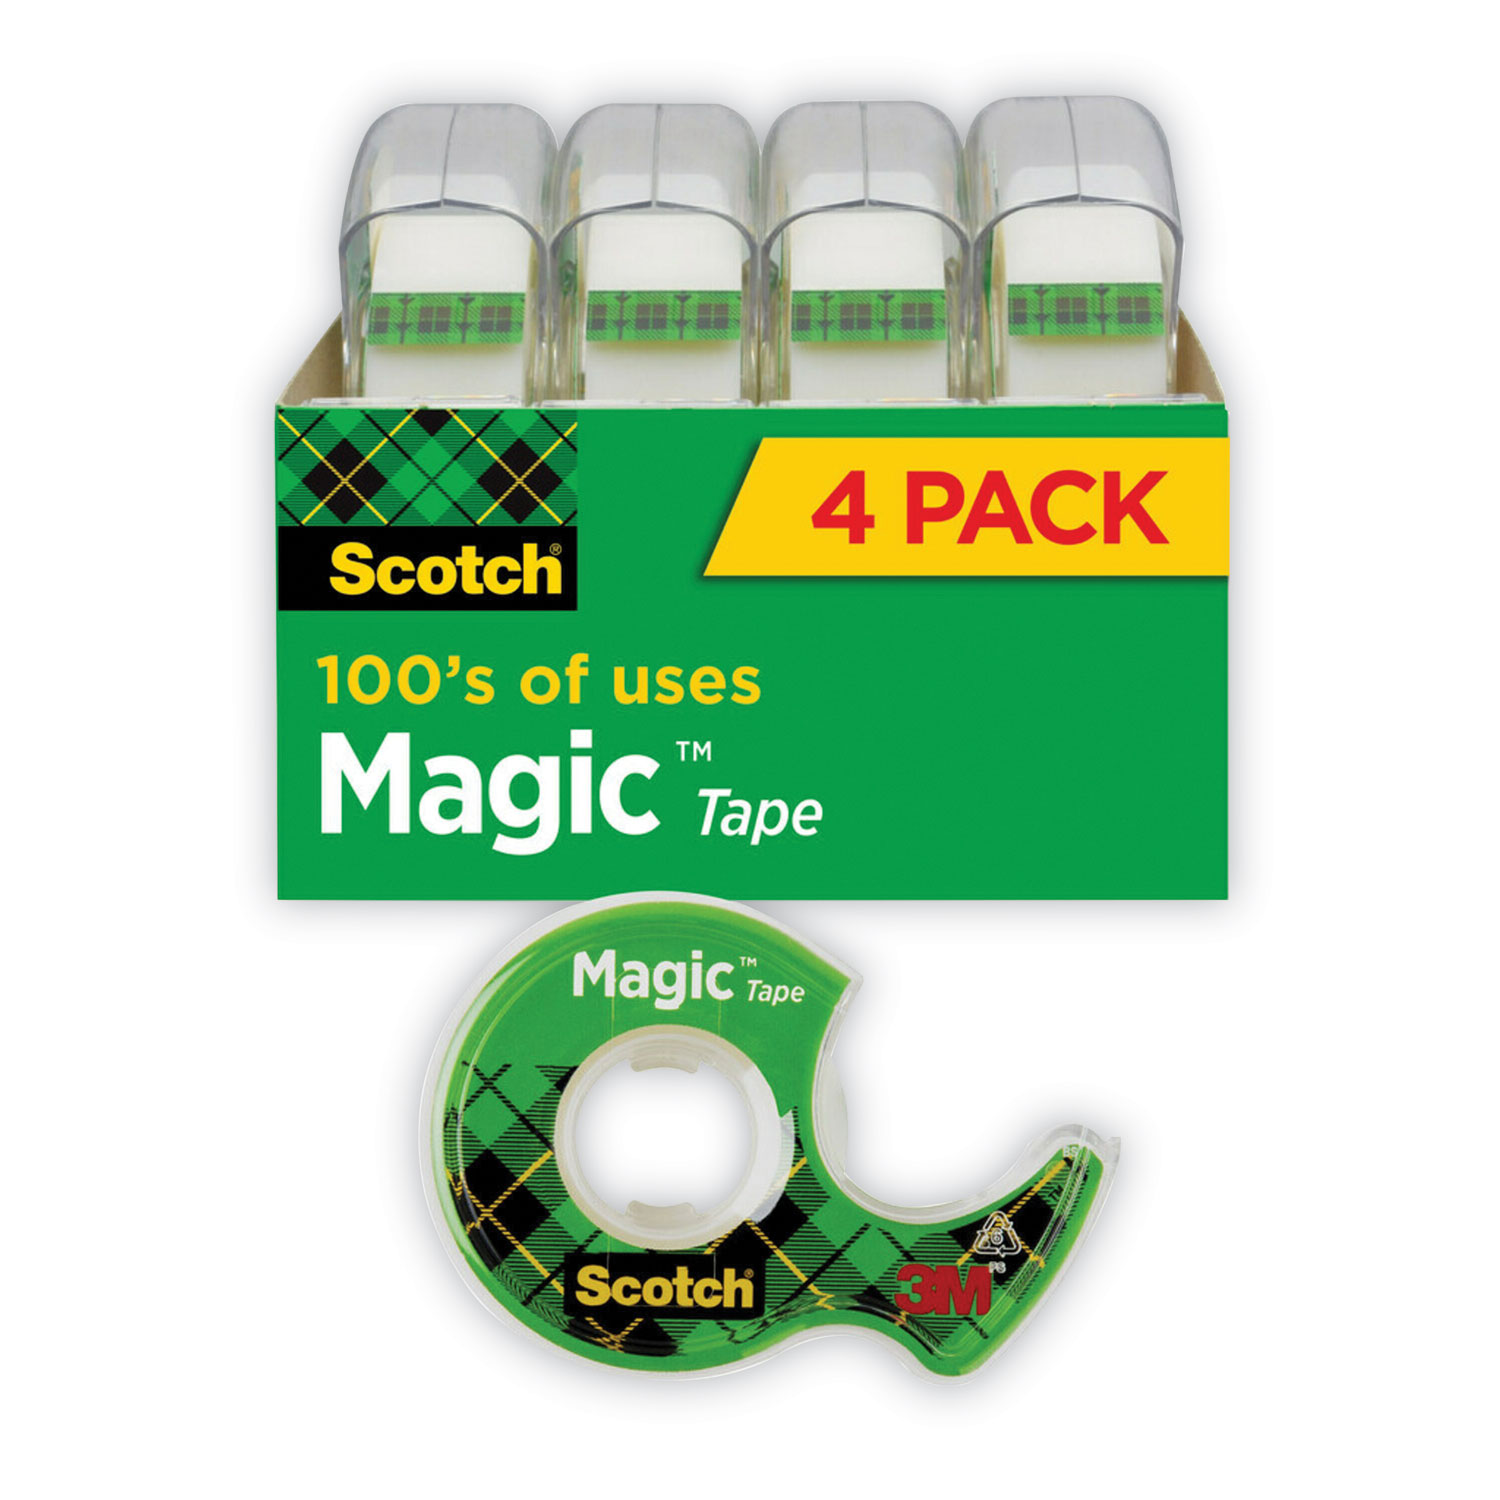 Scotch Magic Tape Refill Rolls, 3/4, 6 Count with Desktop Dispenser